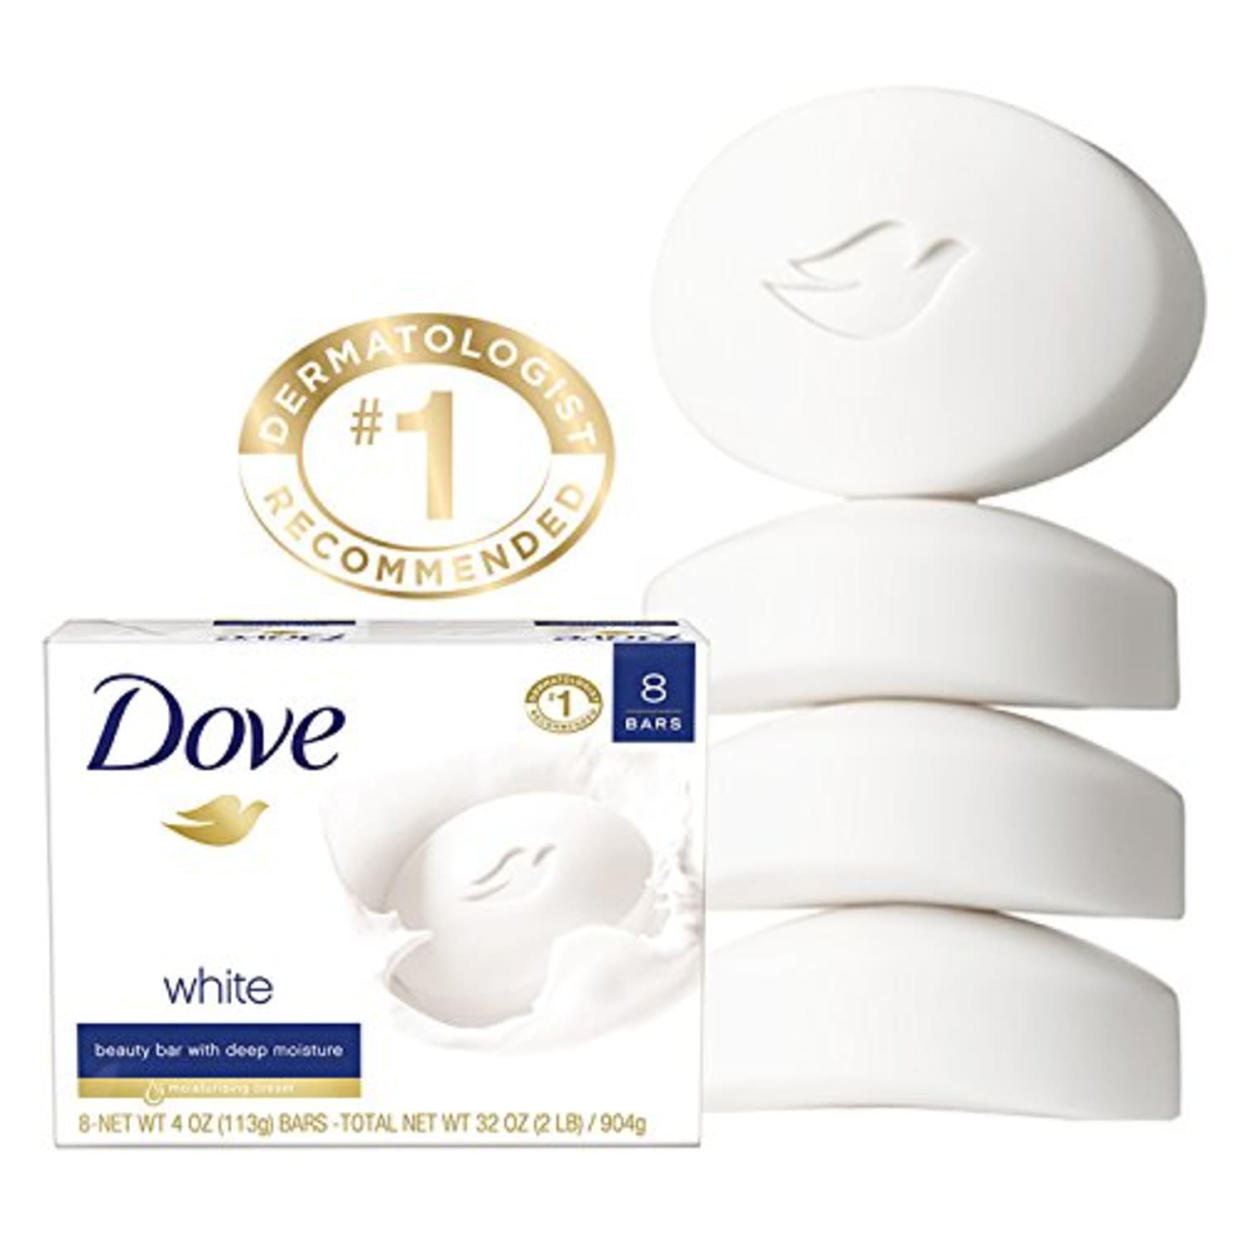 Dove Beauty Bar Gentle Skin Cleanser Moisturizing for Gentle Soft Skin Care Original Made With 1/4 Moisturizing Cream 3.17 oz, 3 Bars (AMAZON)